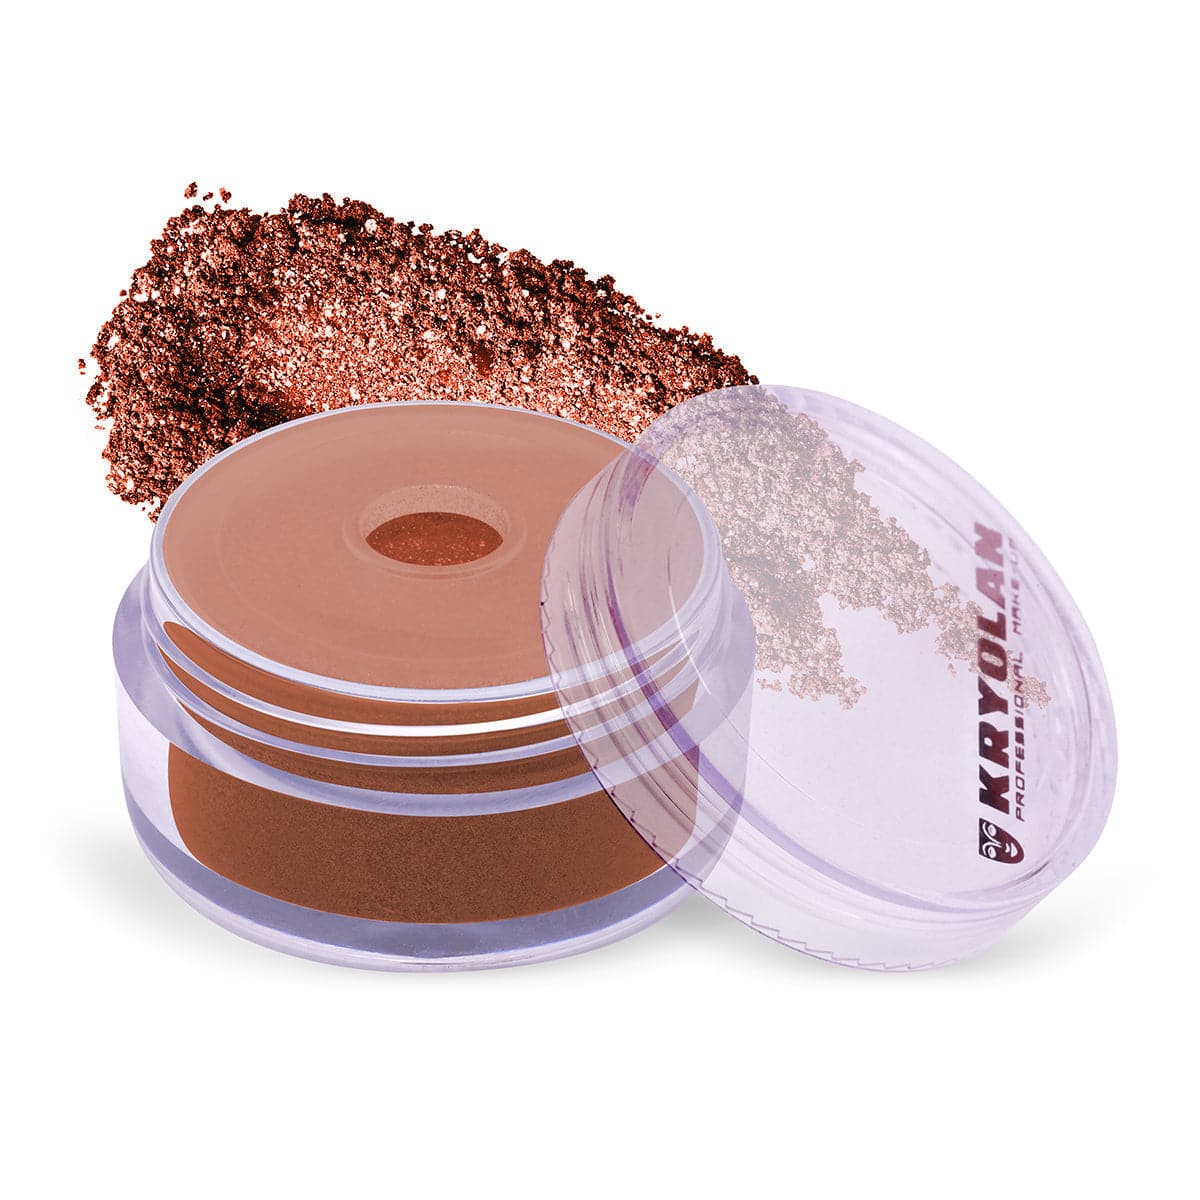 Kryolan Satin Powder - 241 Copper - Premium Health & Beauty from Kryolan - Just Rs 2730.00! Shop now at Cozmetica